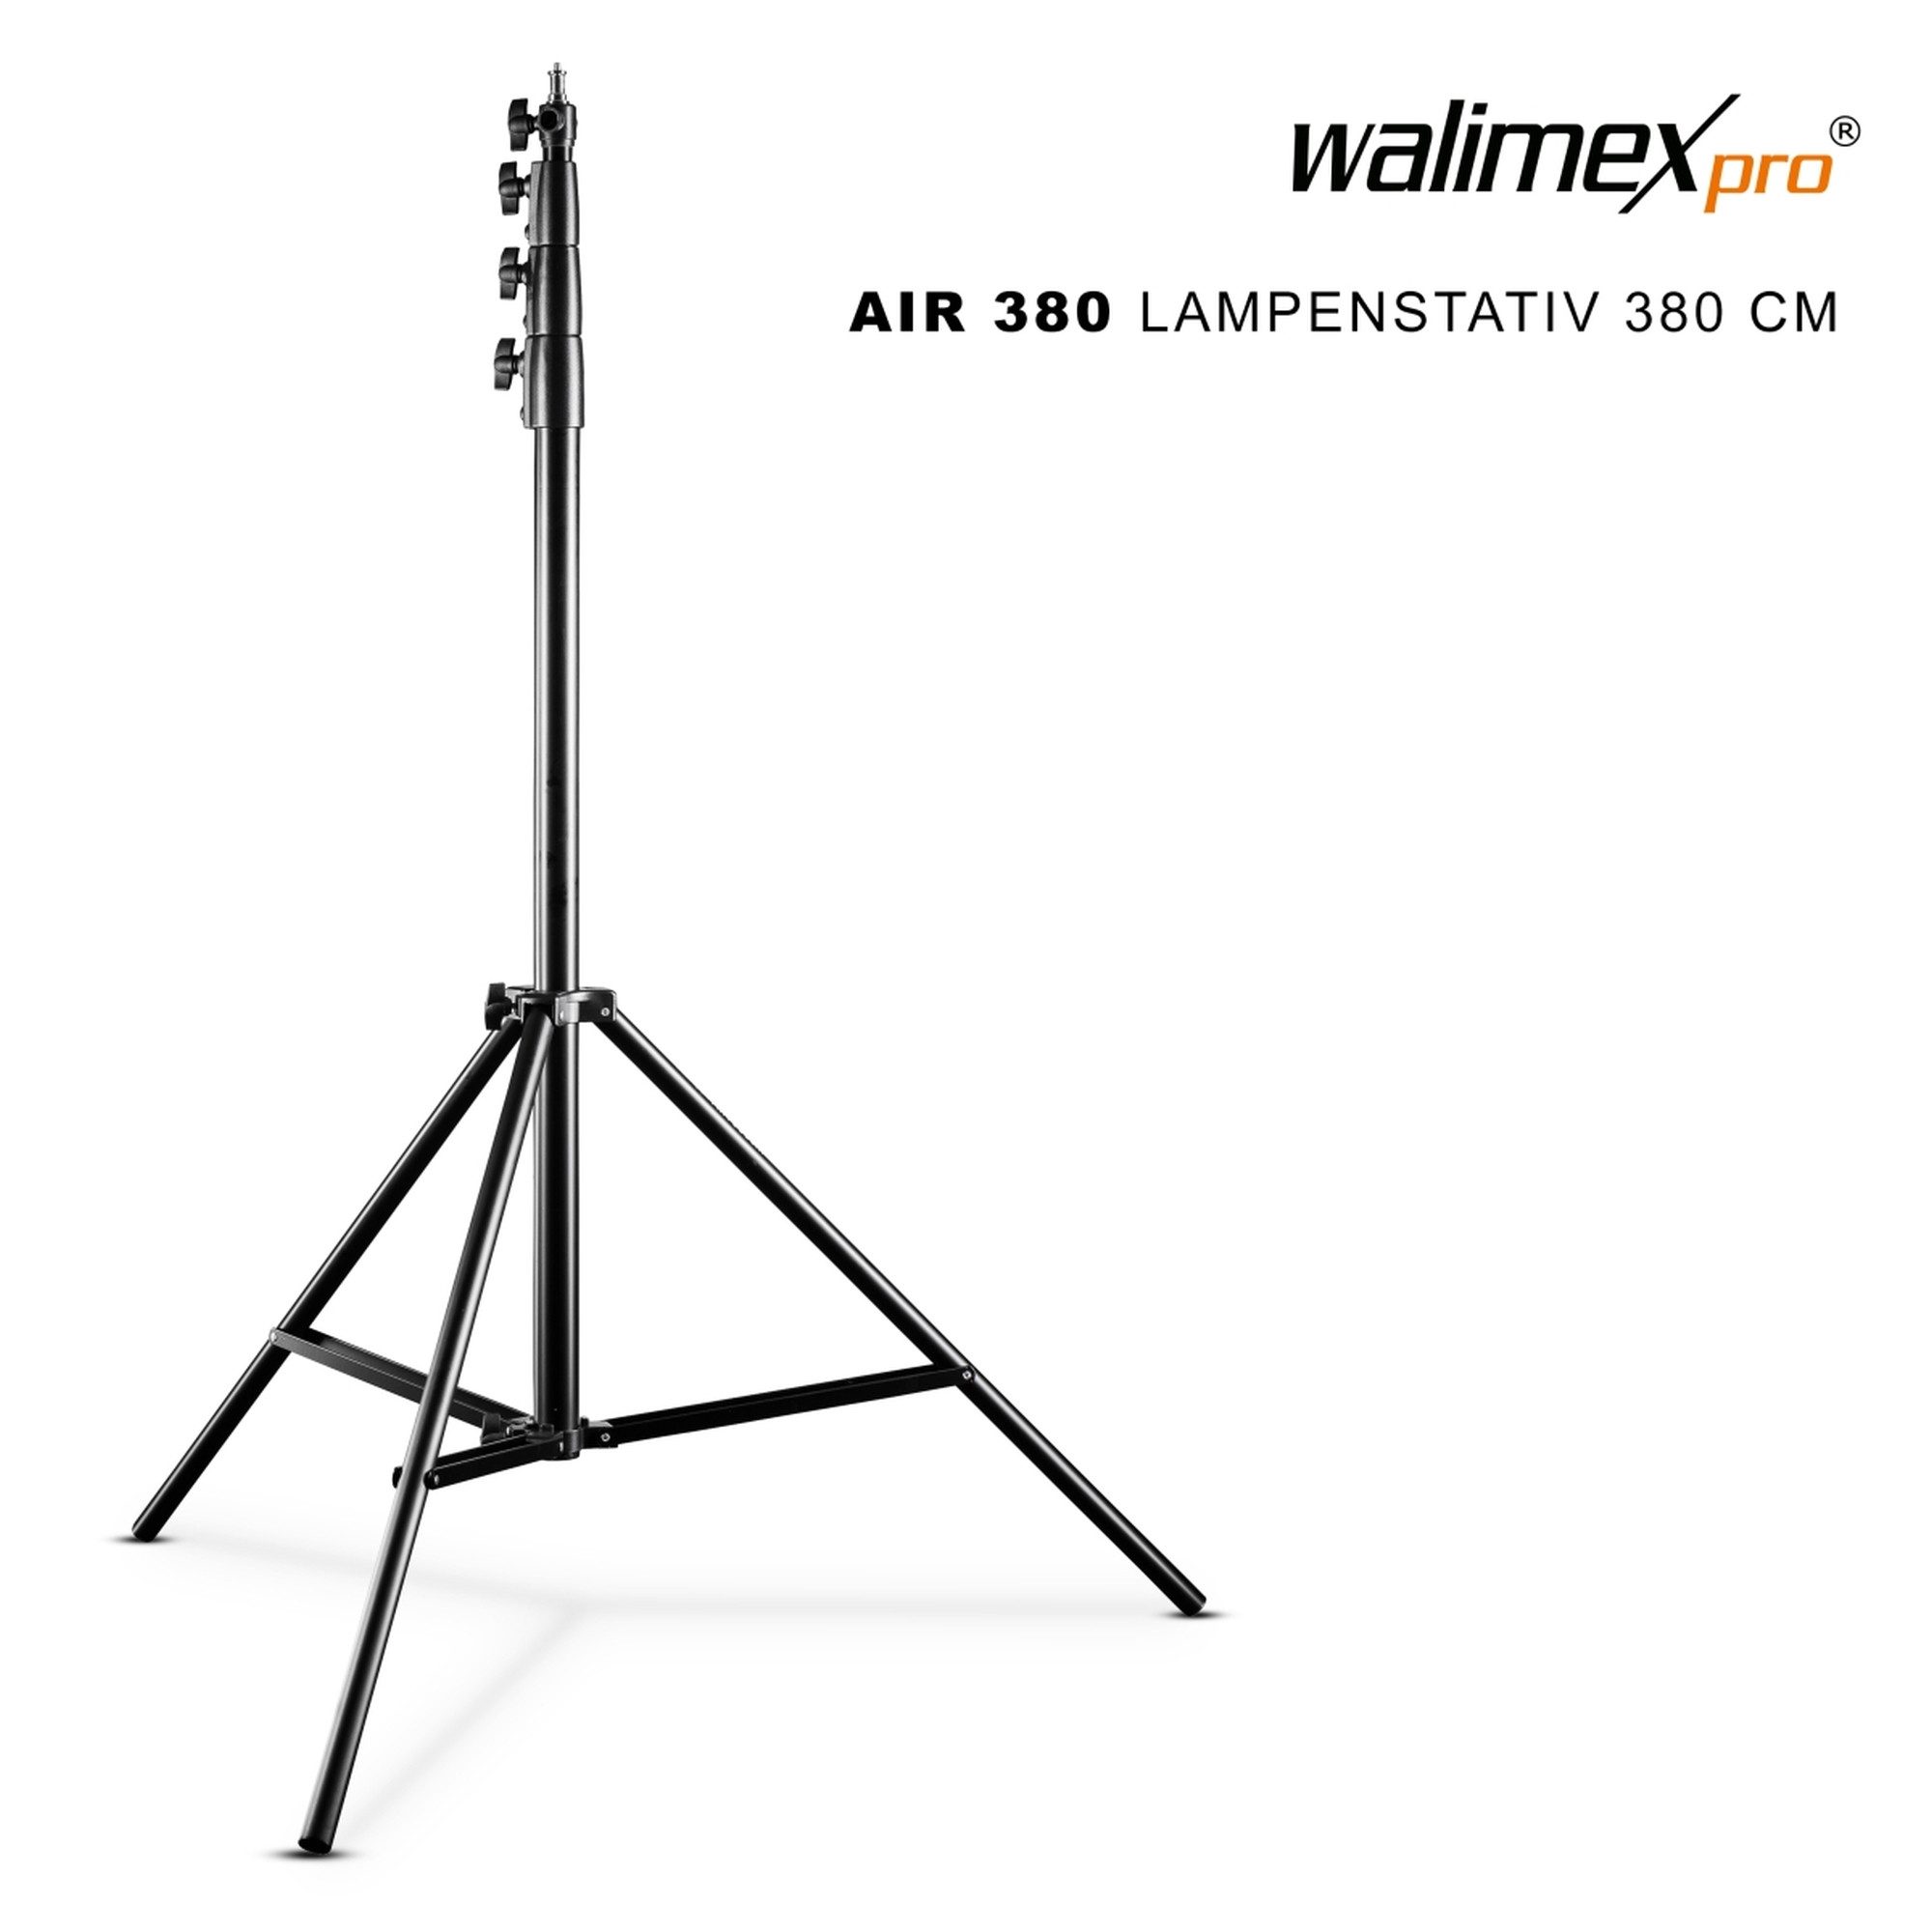 Walimex Pro AIR 380 Deluxe Lampenstativ 380 cm Lampenstativ